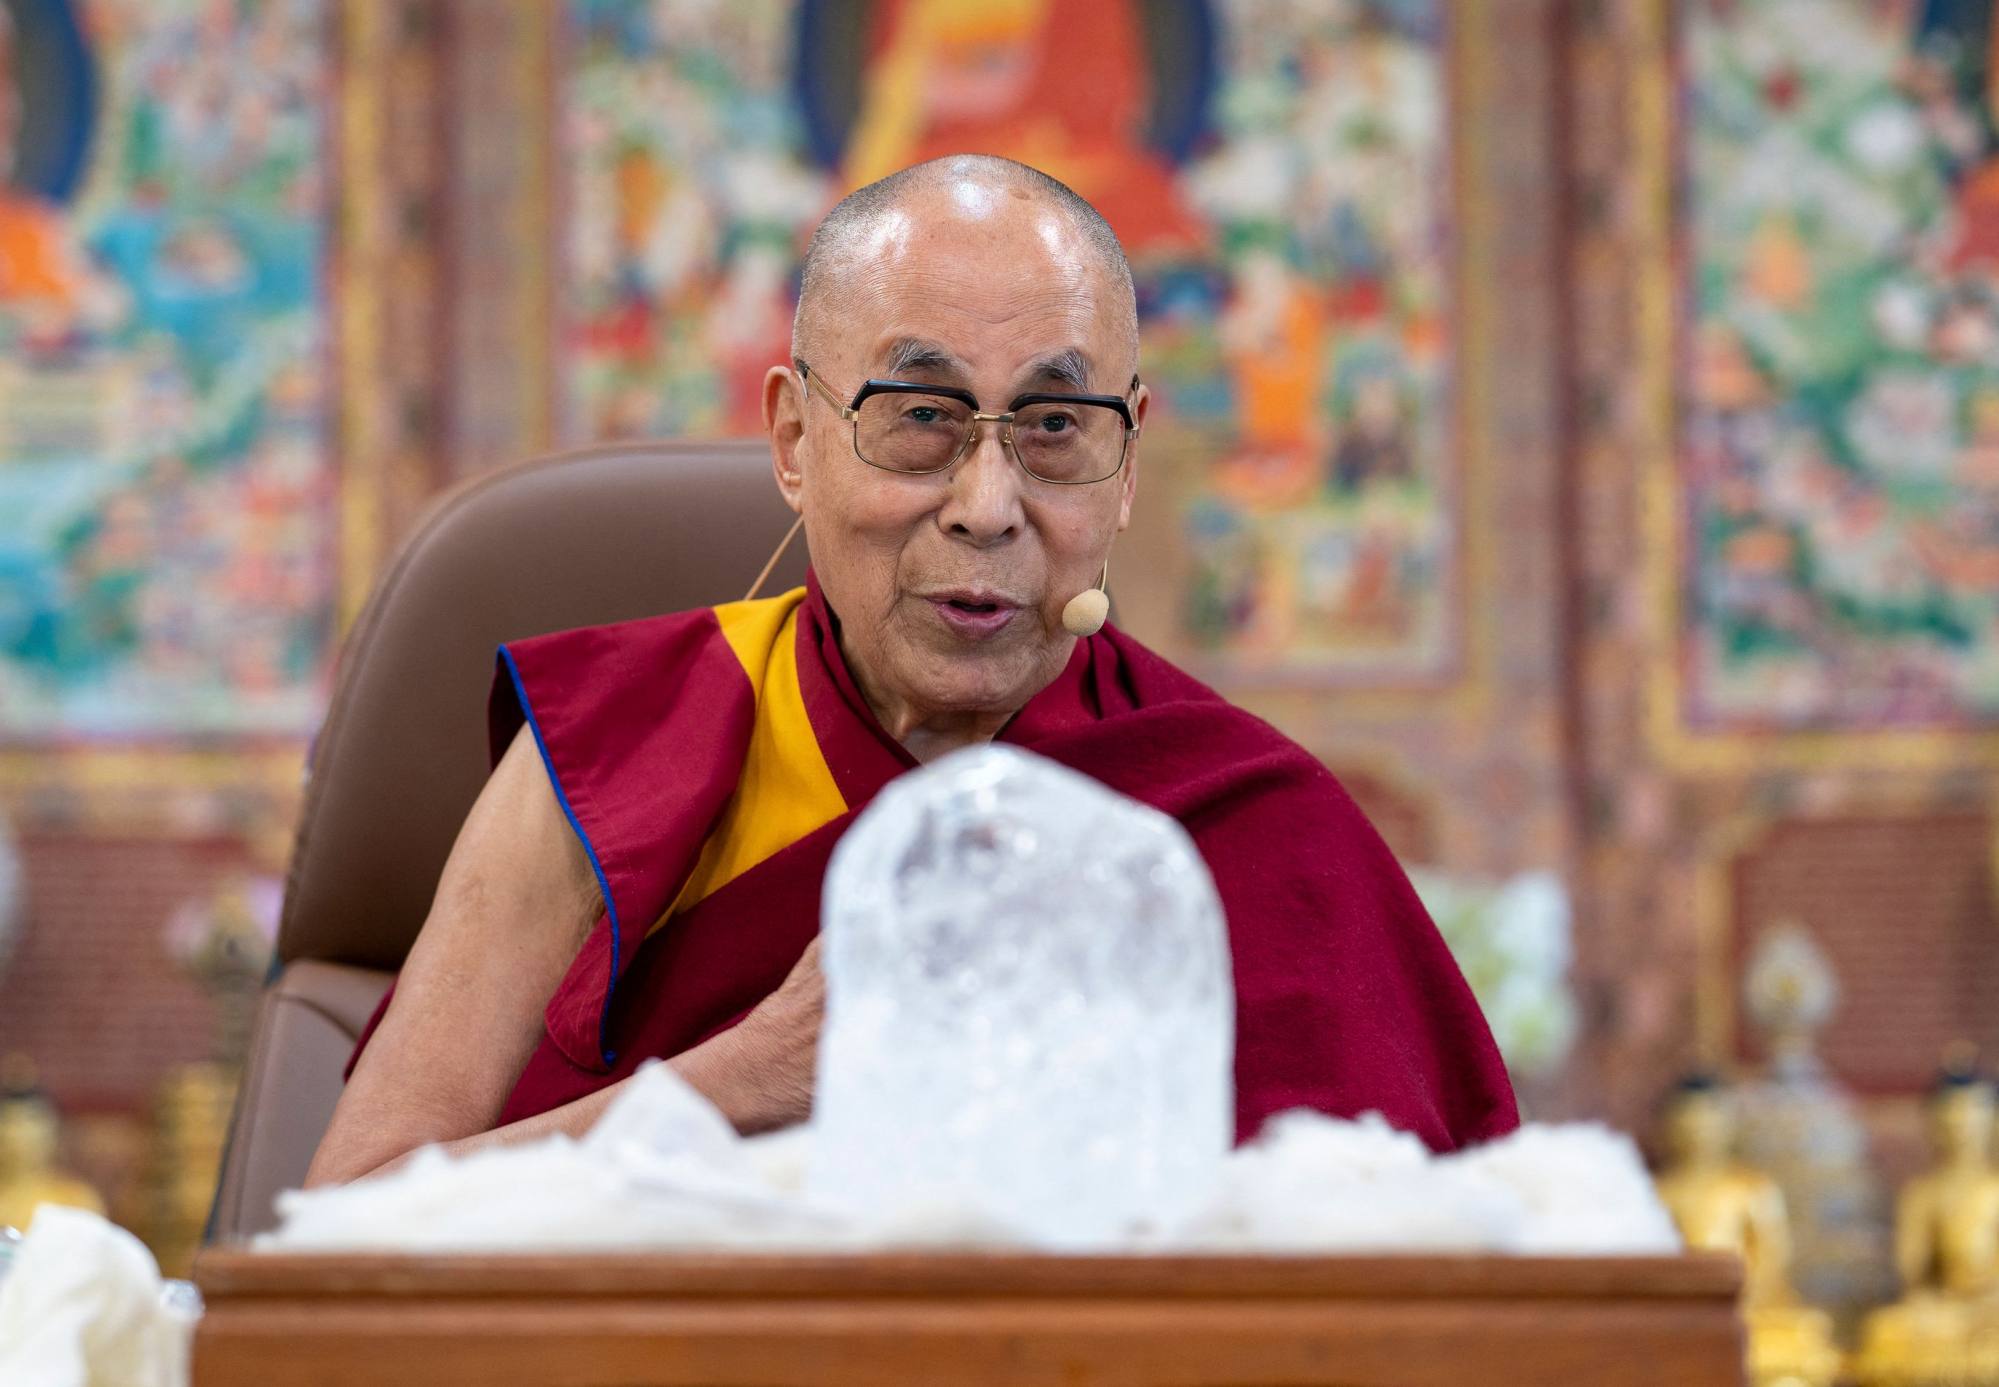  My Big Breast Adventure: or How I Found the Dalai Lama